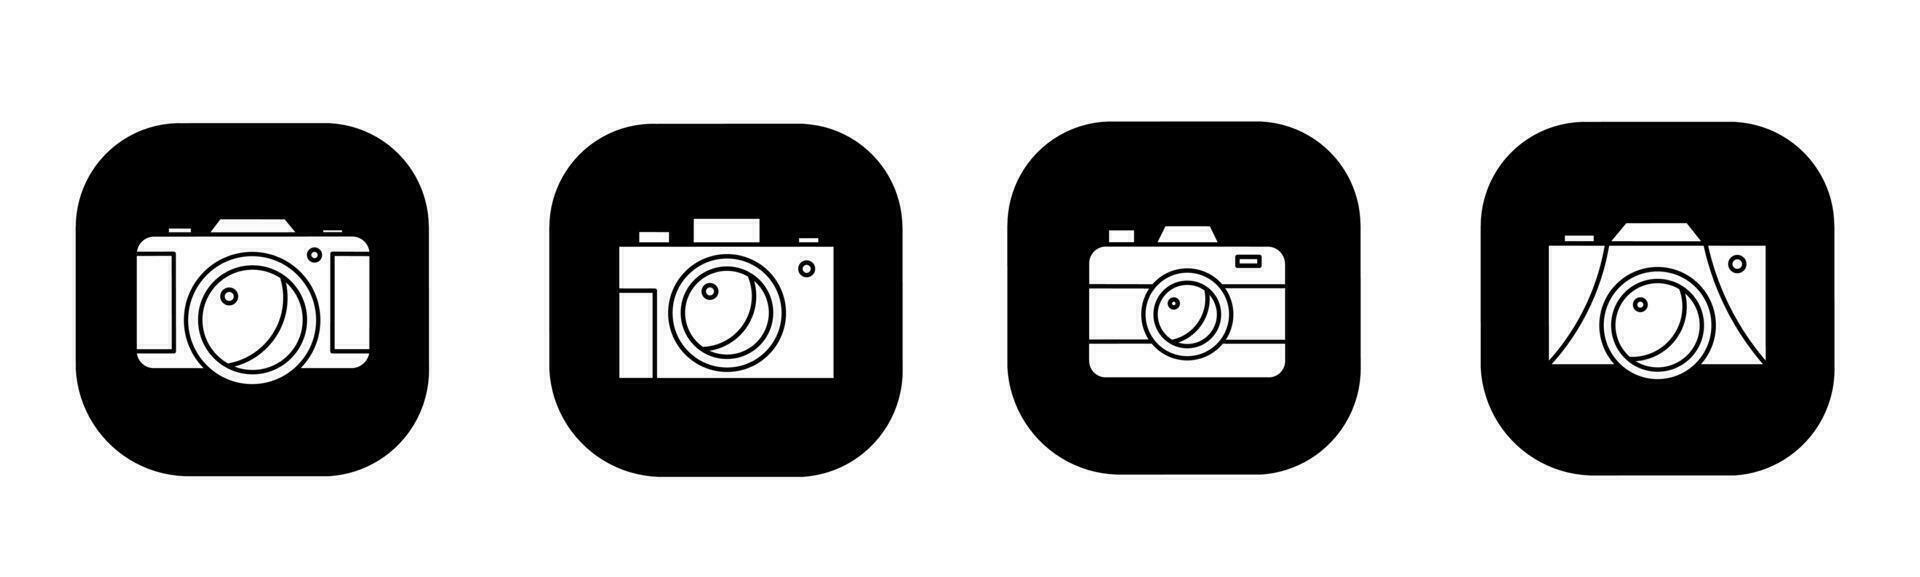 Camera icon in flat. A camera icon design. Stock vector. vector